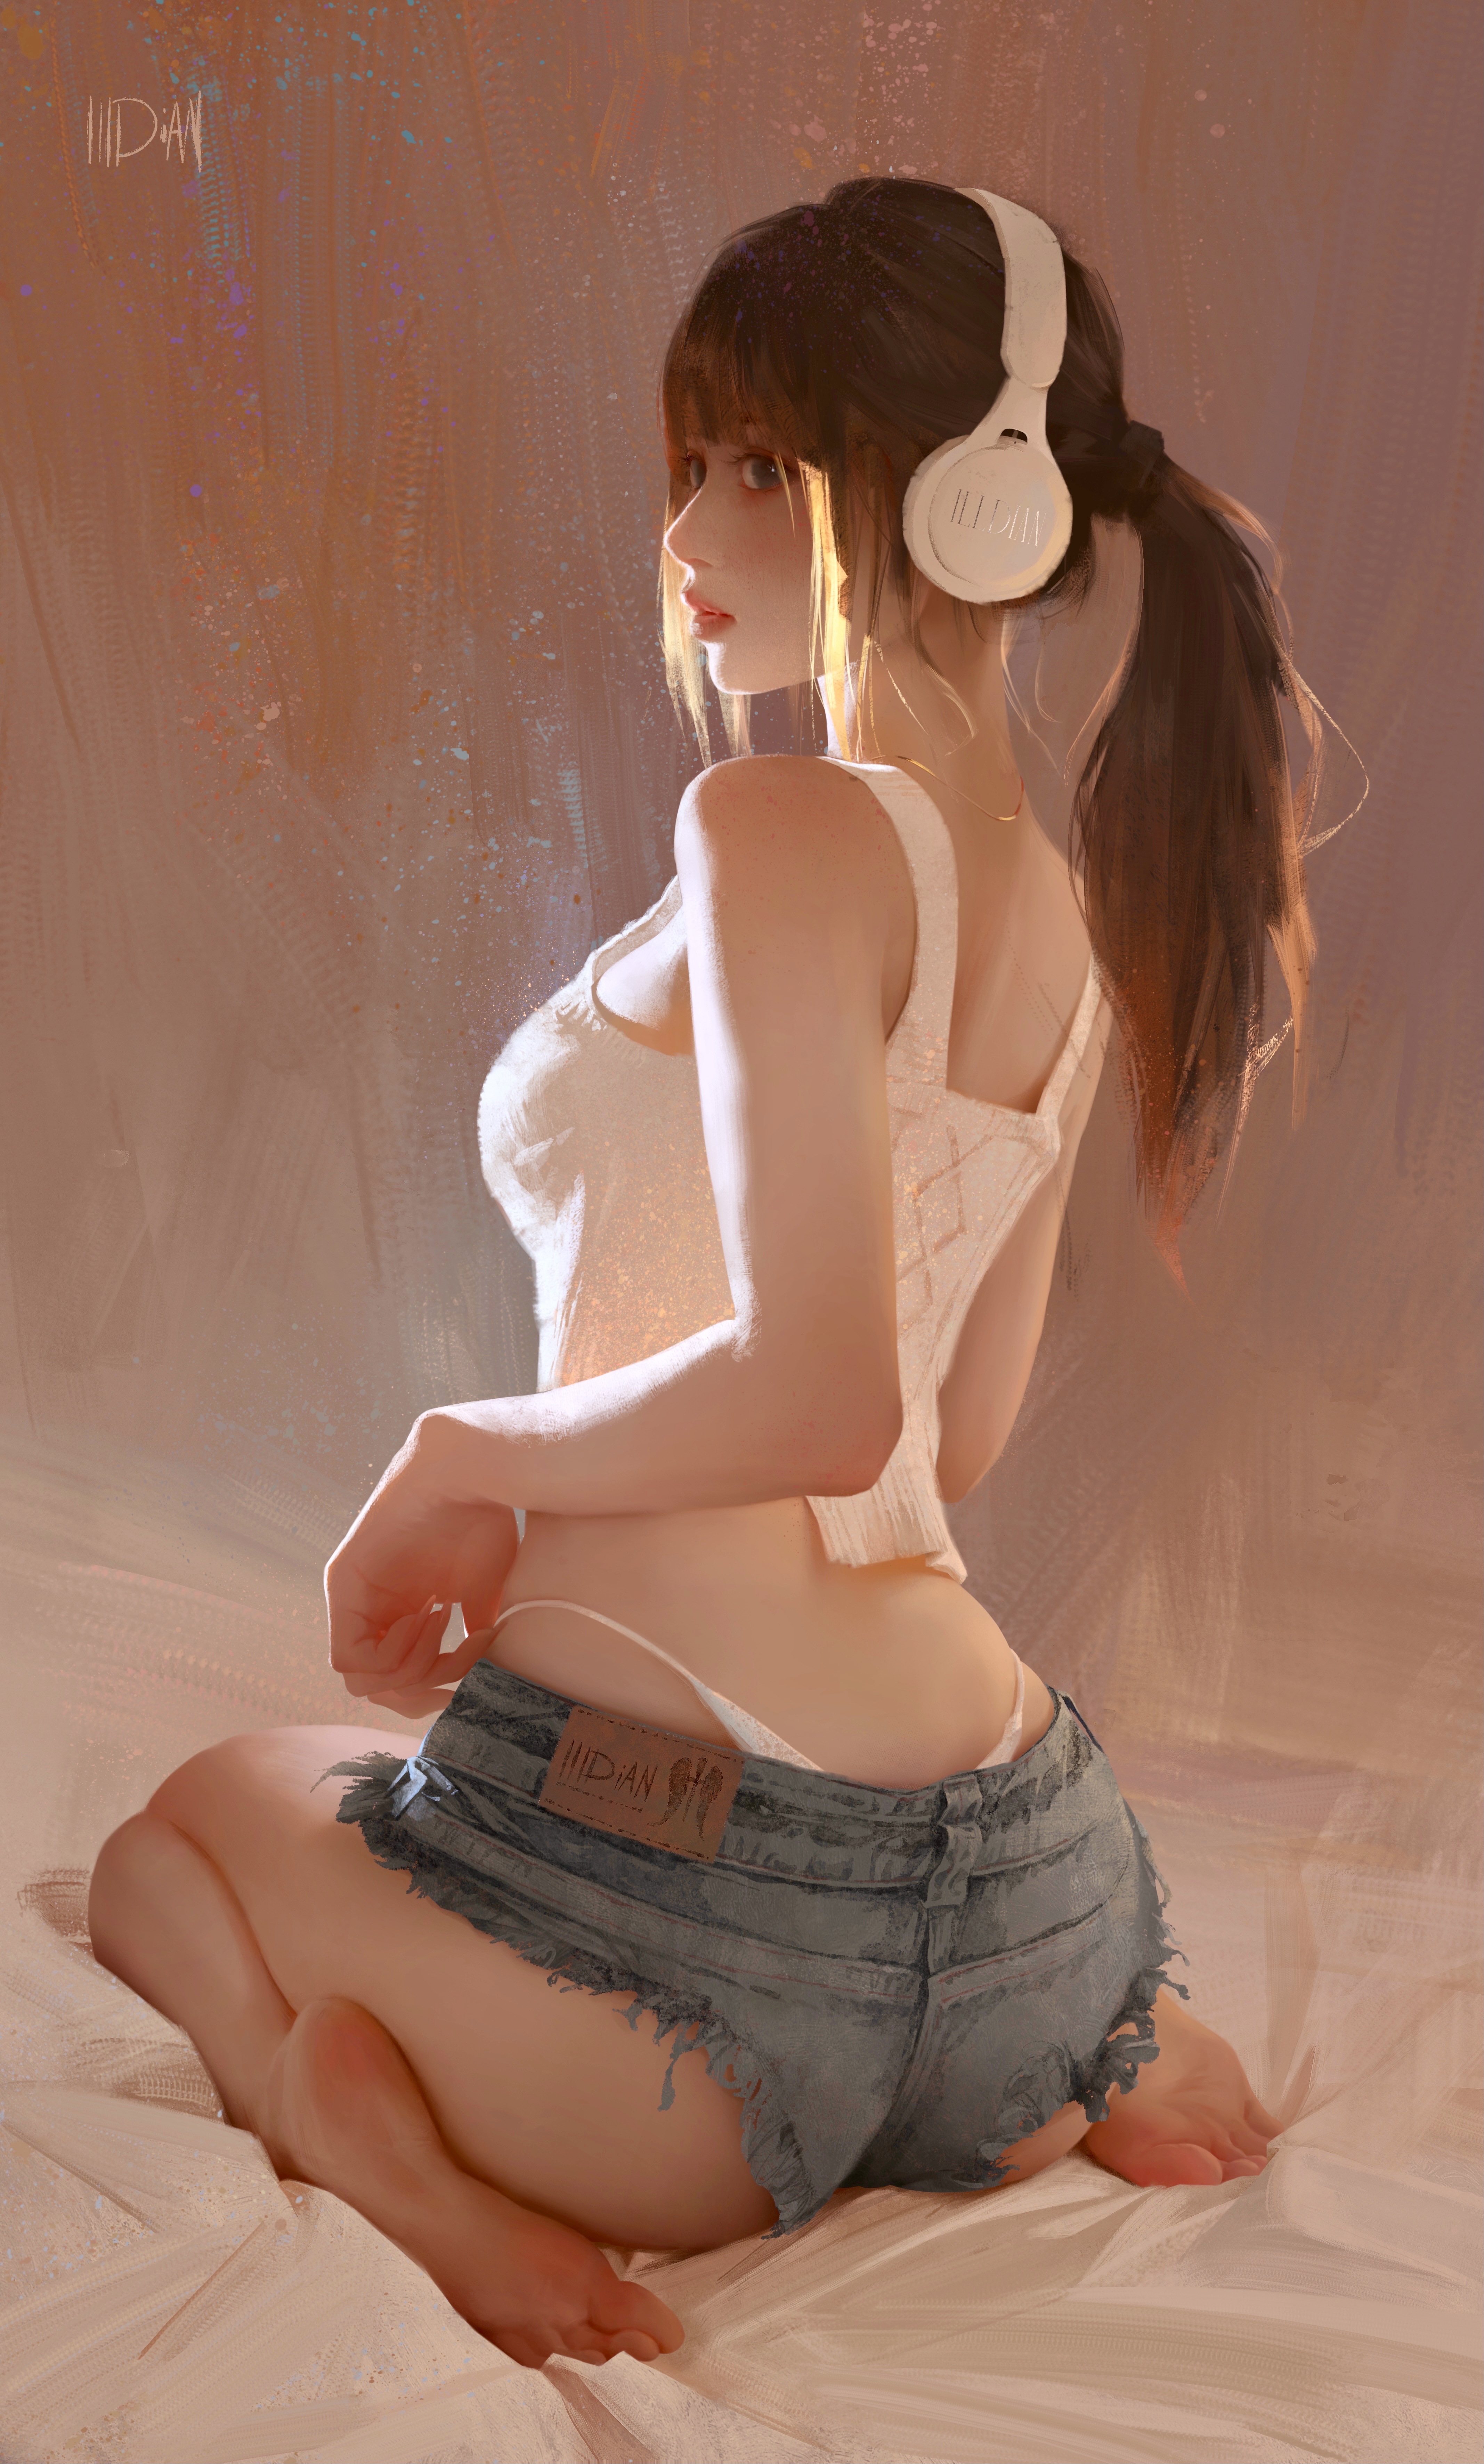 ILLDiAN Legs Artwork Women Brunette Headphones Tank Top Jean Shorts Barefoot Rear View Looking Over  4269x7087